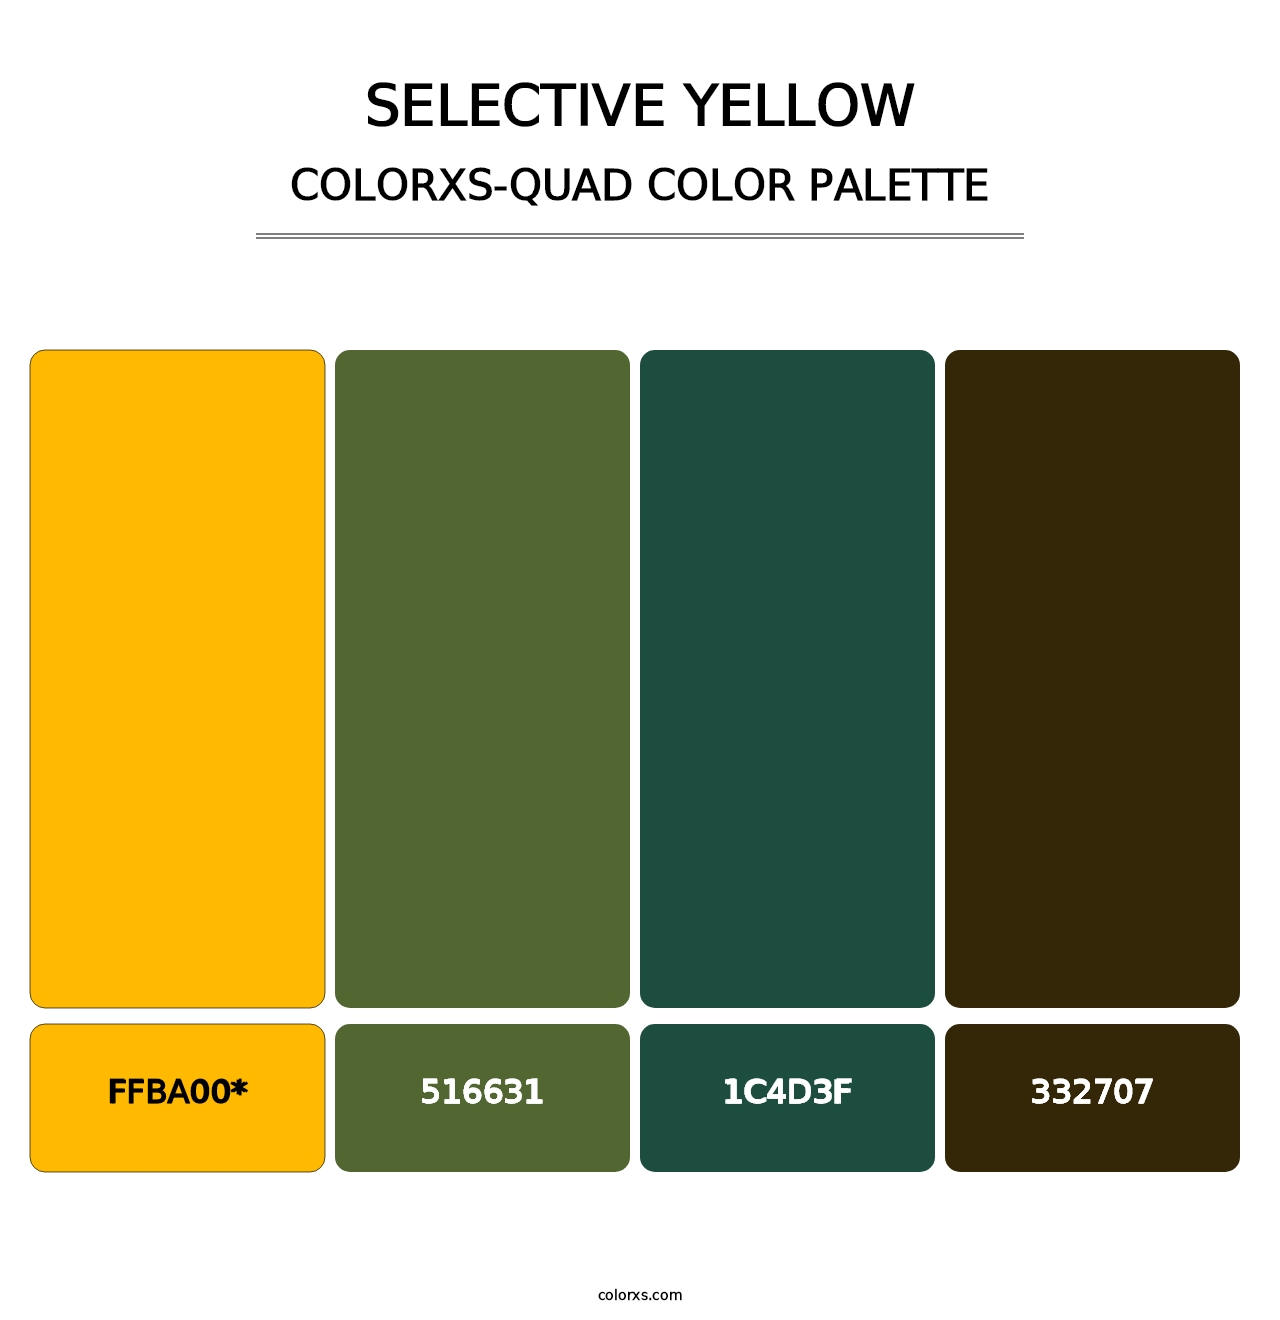 Selective yellow - Colorxs Quad Palette